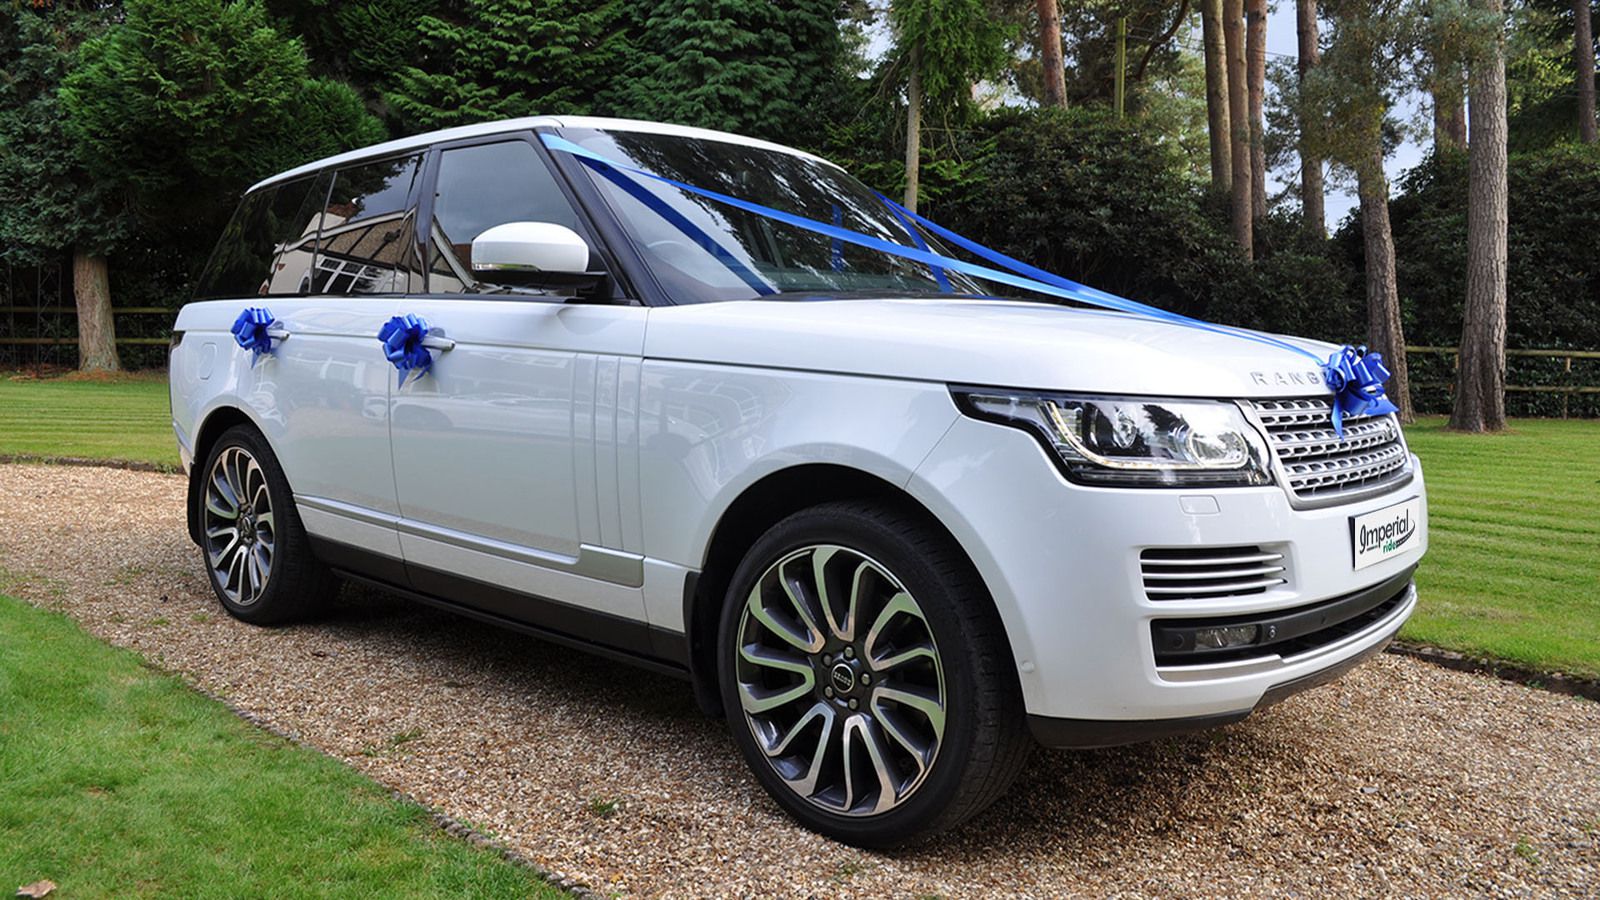 luxury wedding car hire in london